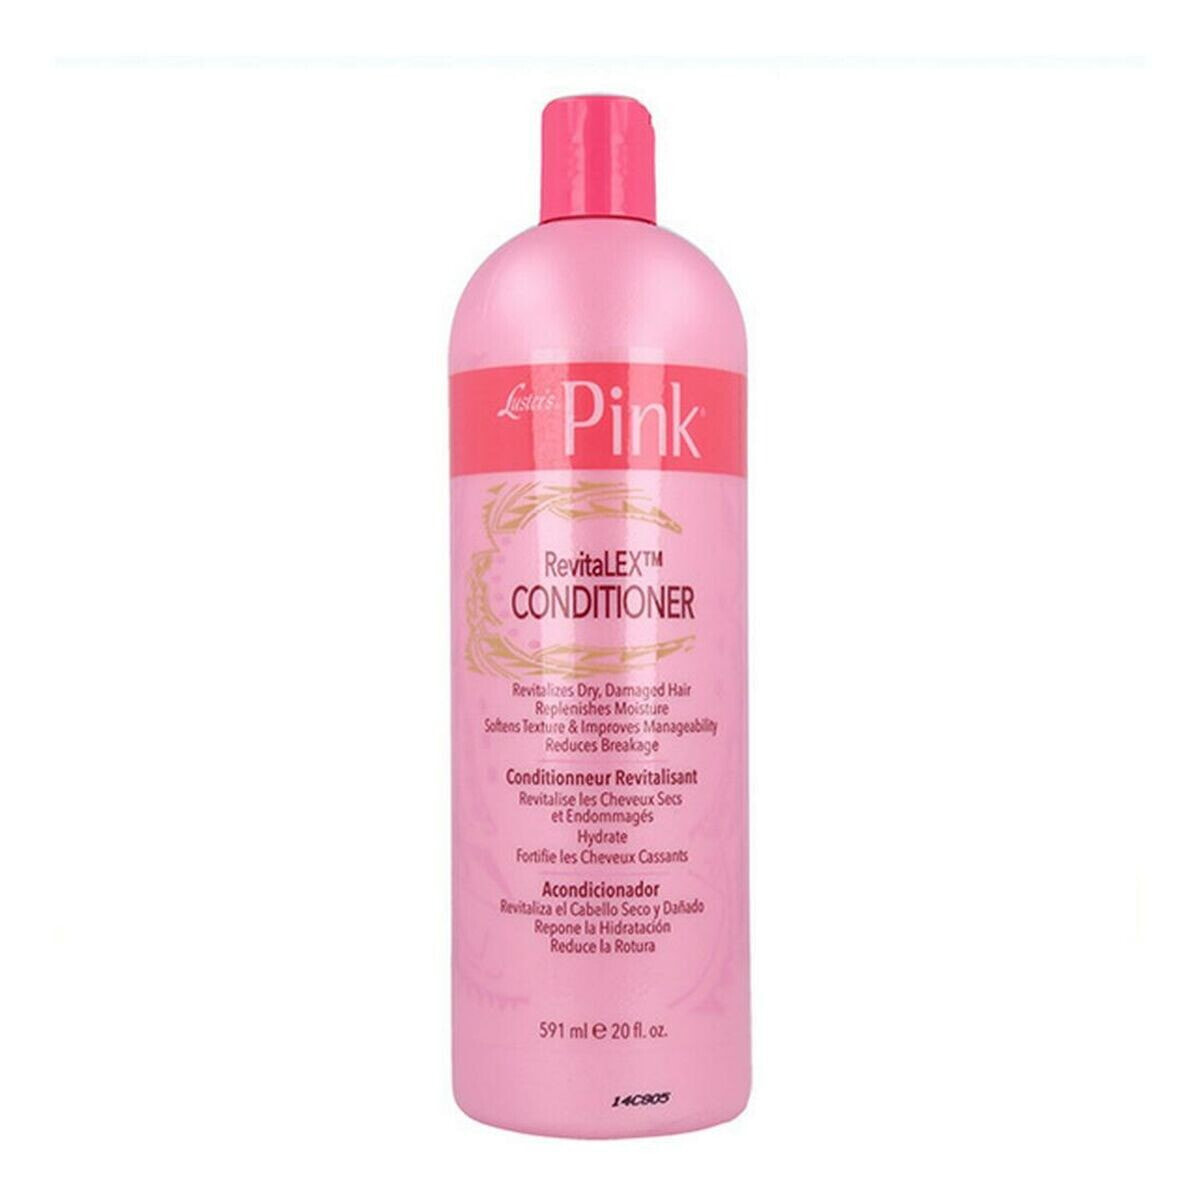 Кондиционер Pink Luster's (591 ml)